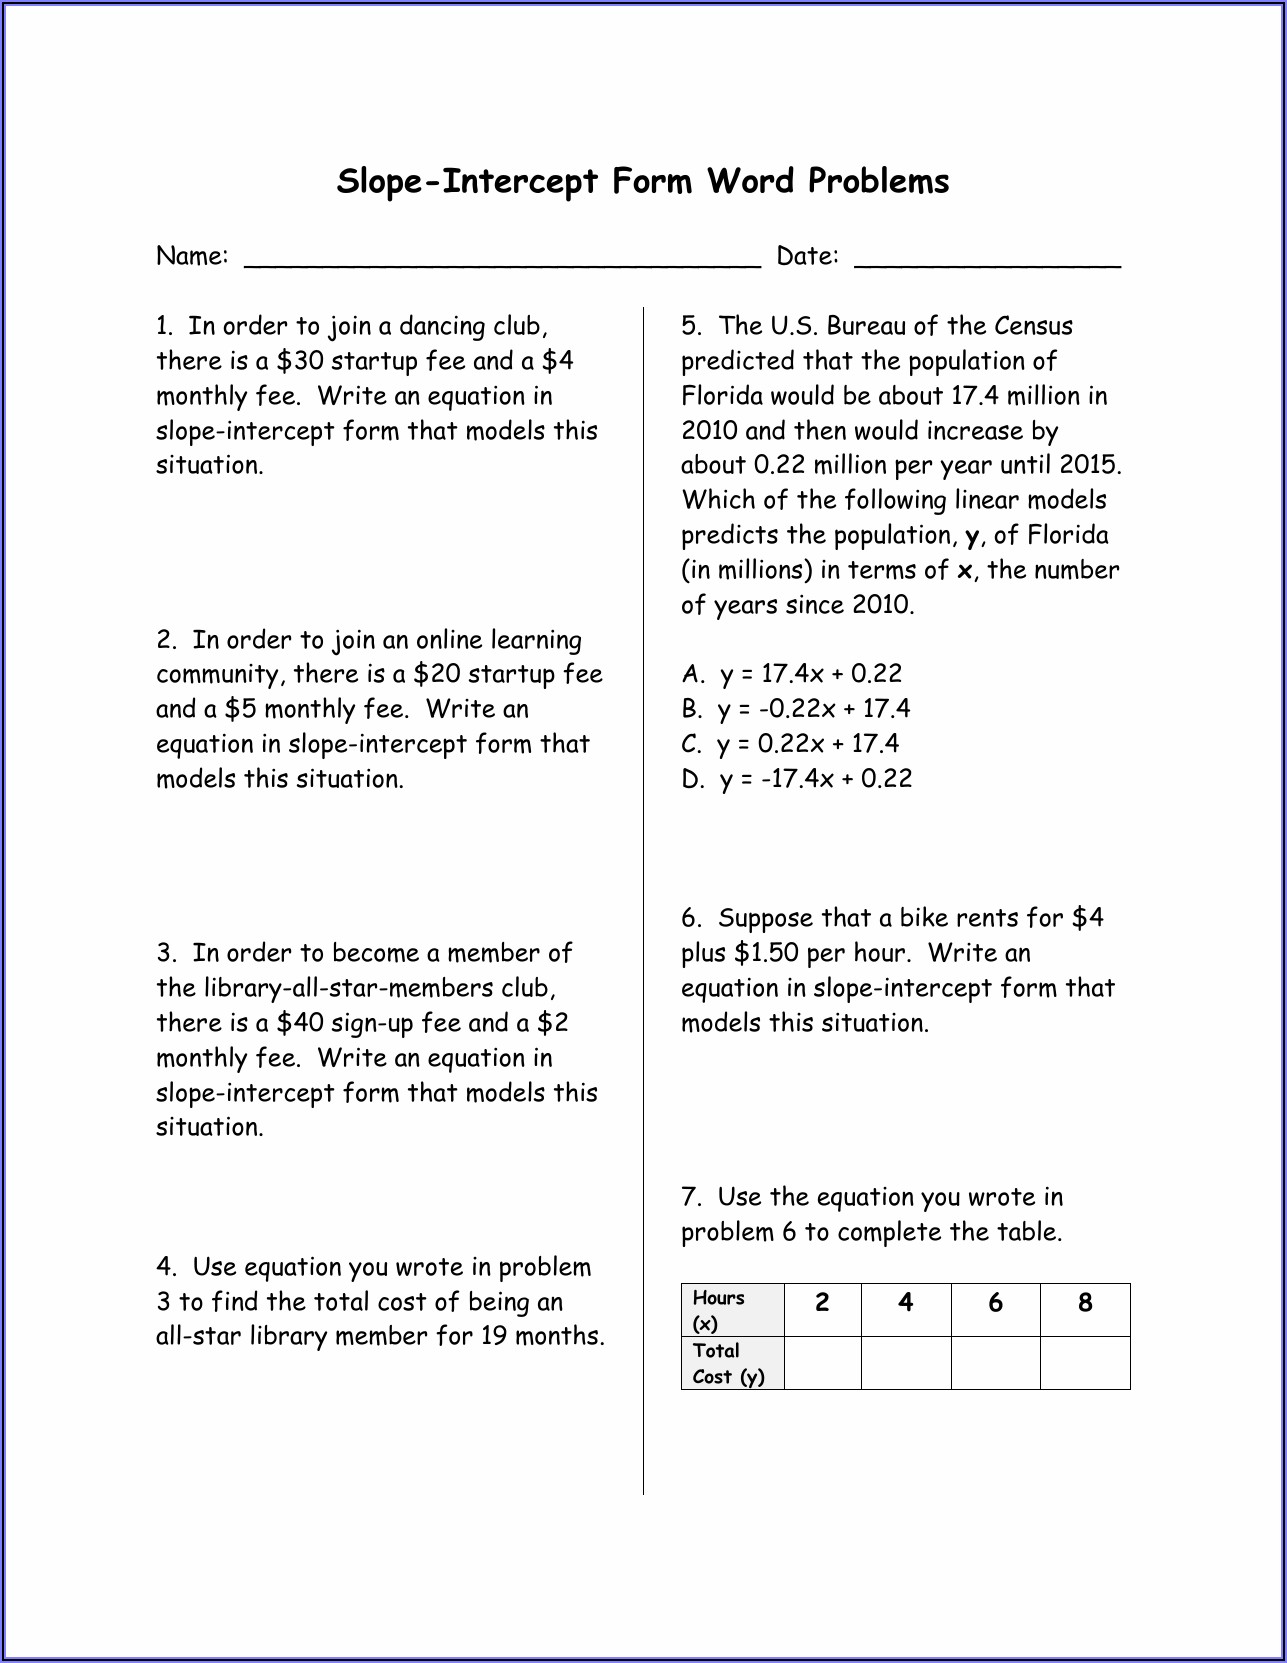 slope-intercept-form-word-problems-worksheet-answer-key-worksheet-resume-template